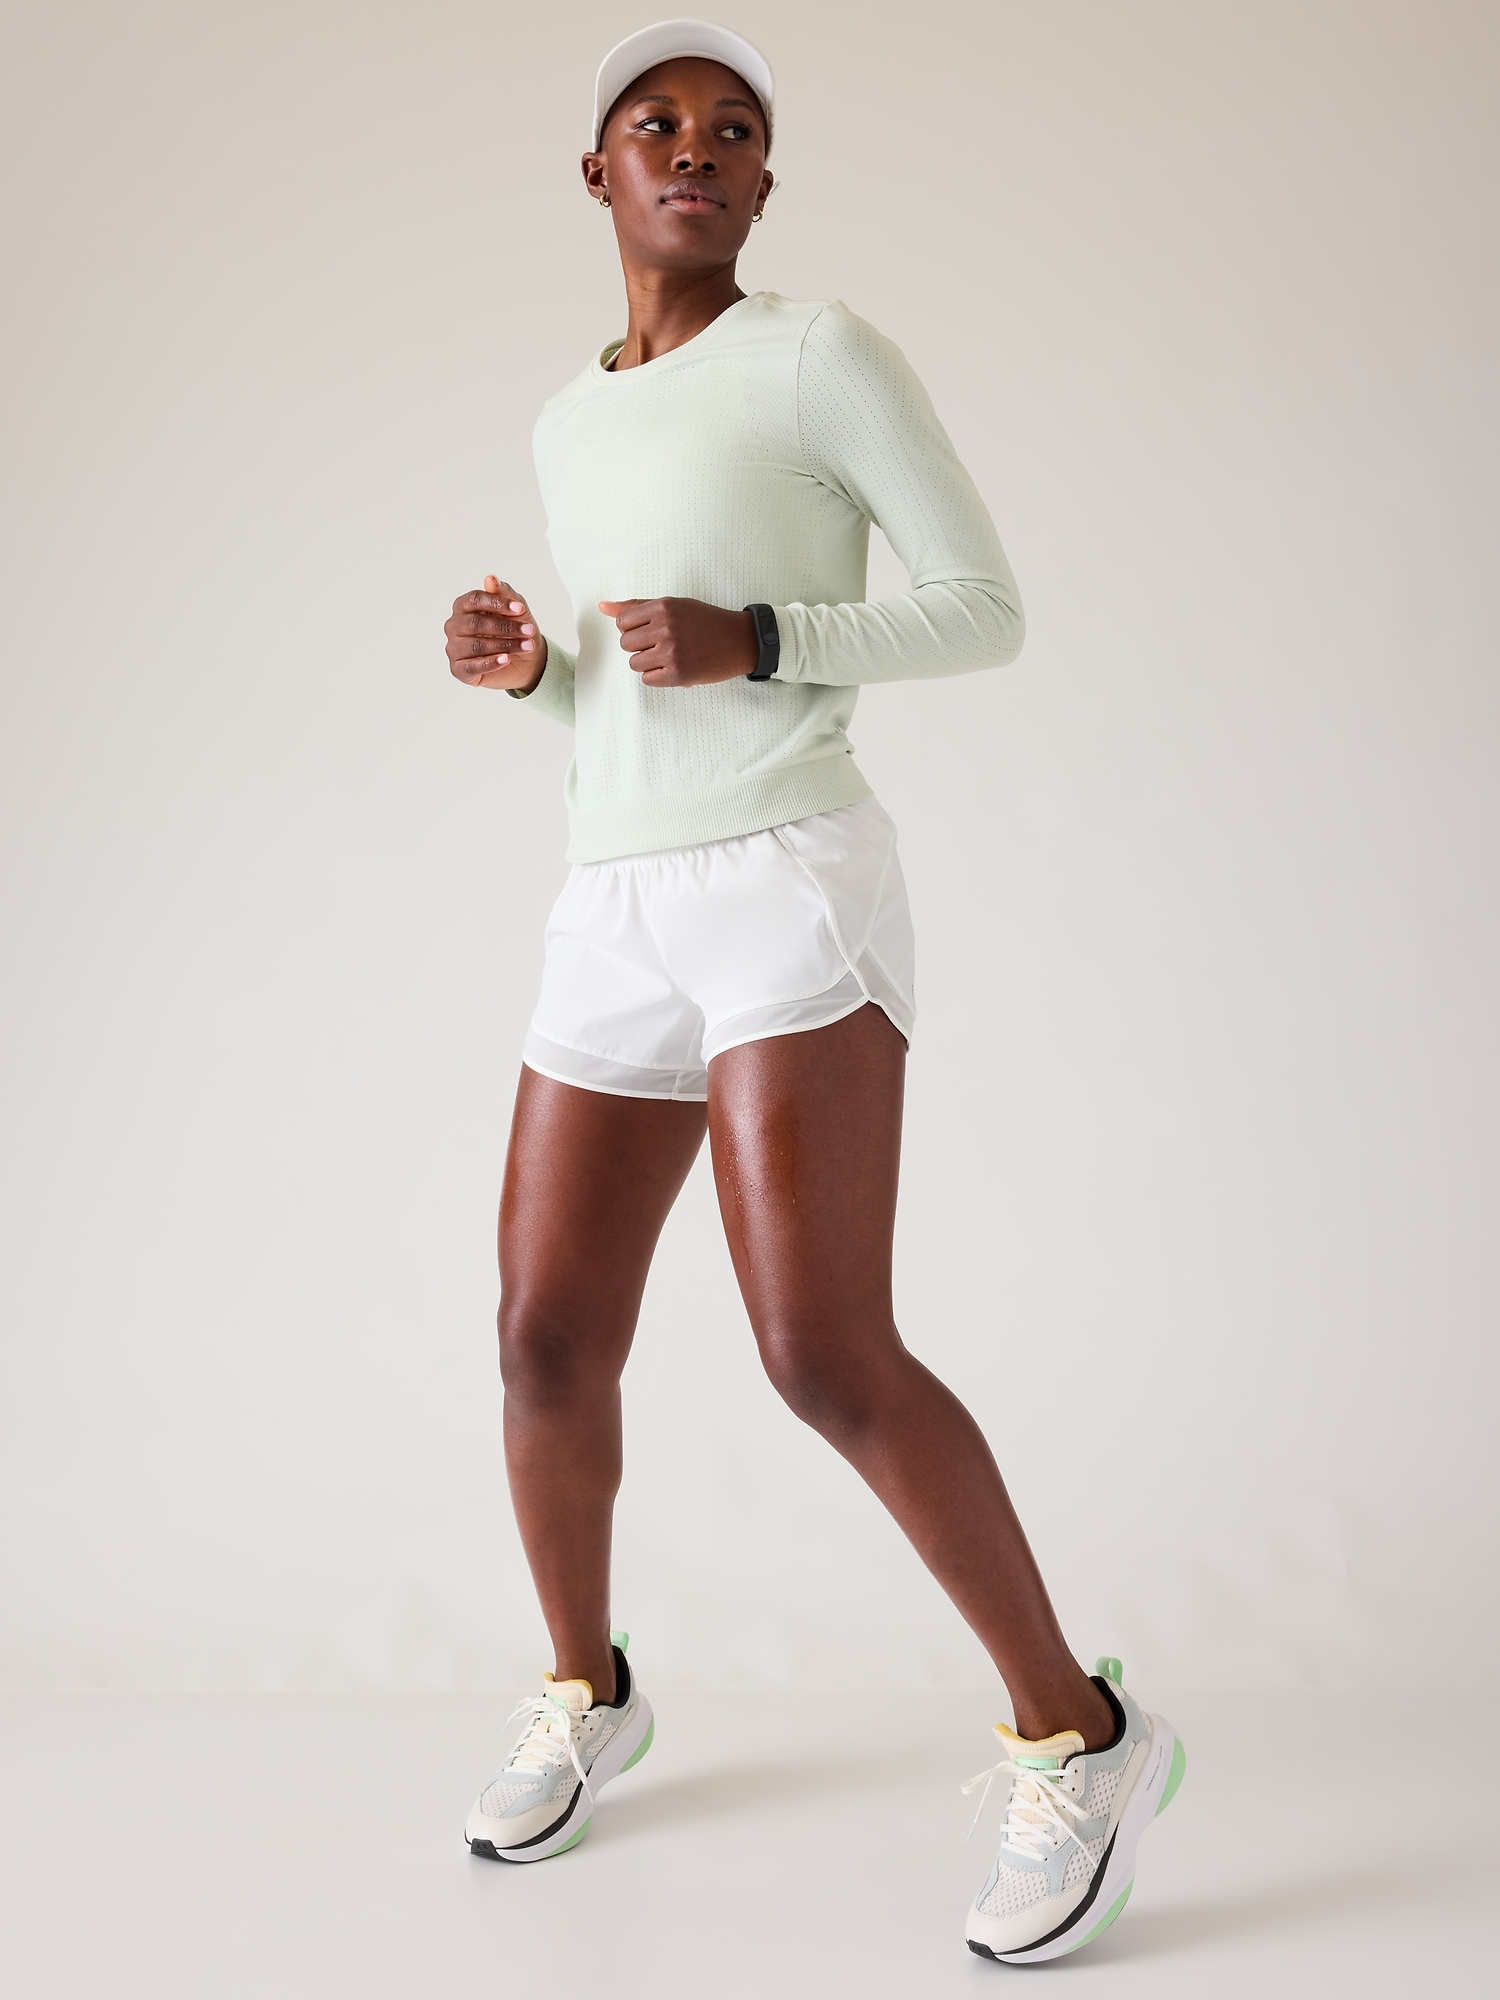 AUROLA 3 Pieces Pack Sets CAMO Workout Shorts for Women Seamless